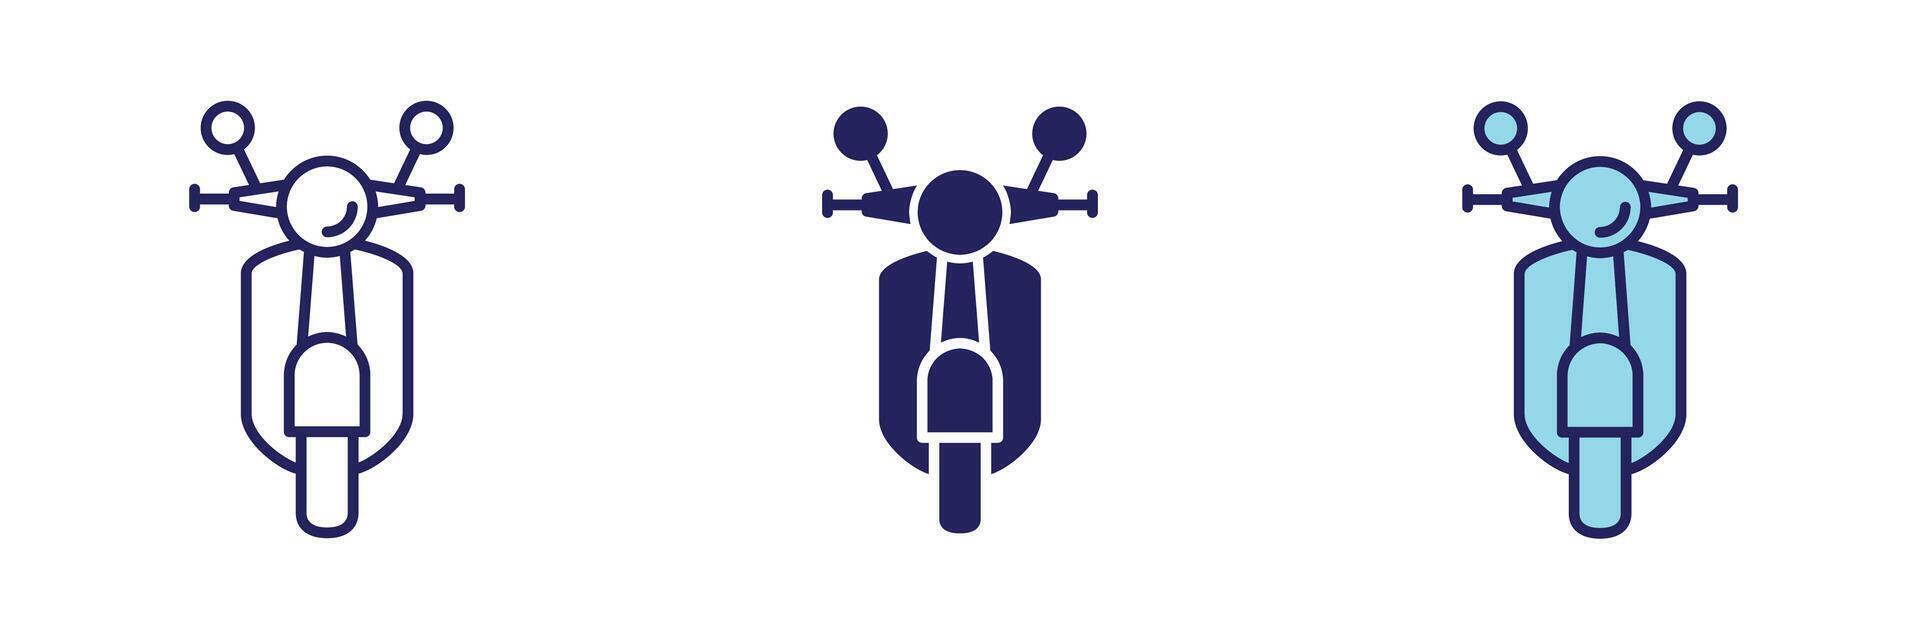 Motorcycle Transportation Icon - Navigation Set vector